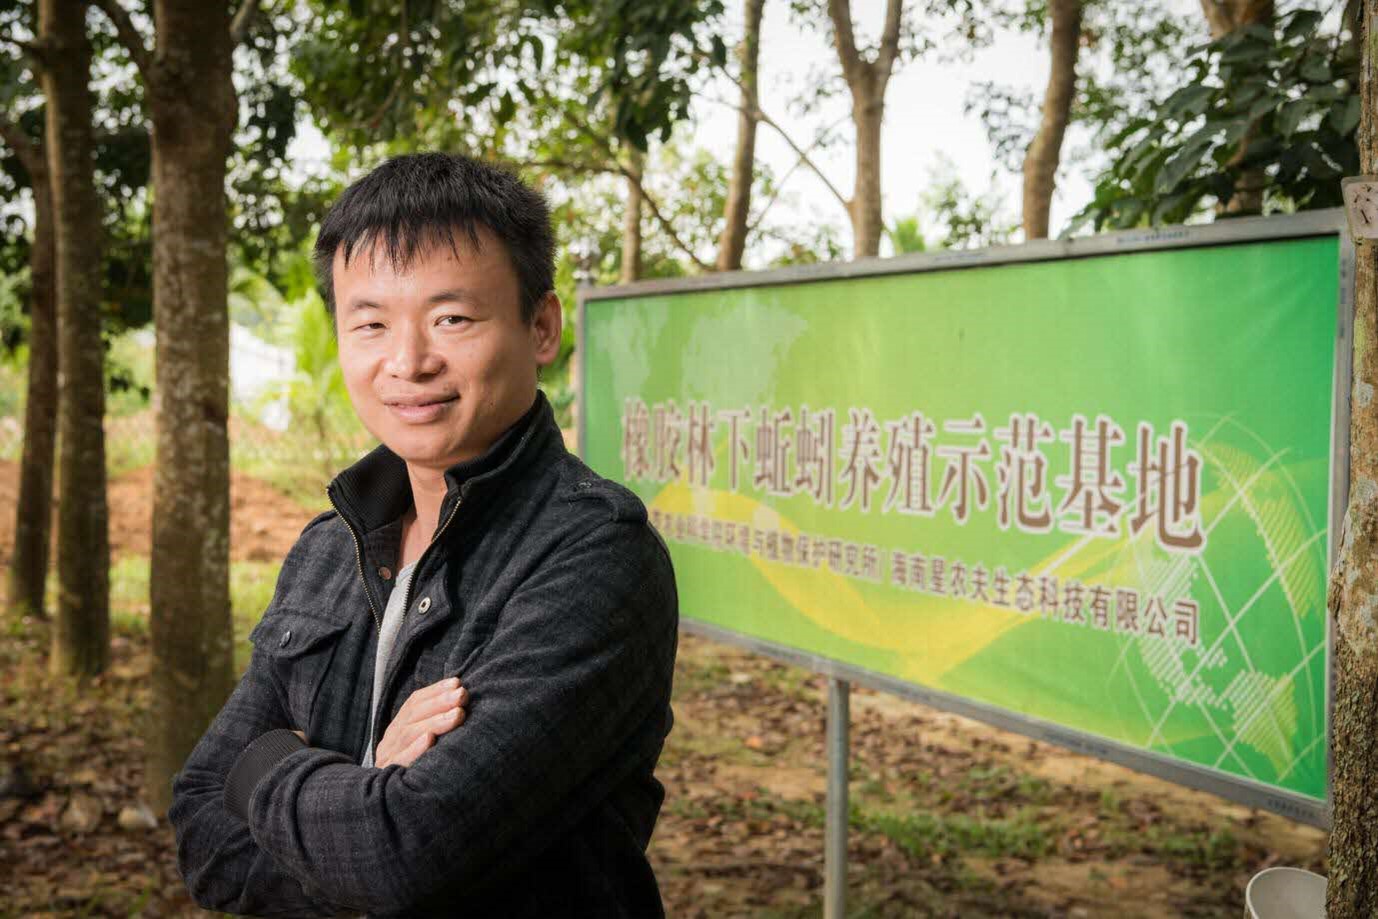 Photo Caption: Founder of Star Farmer, Su Jiancheng, in Hainan province